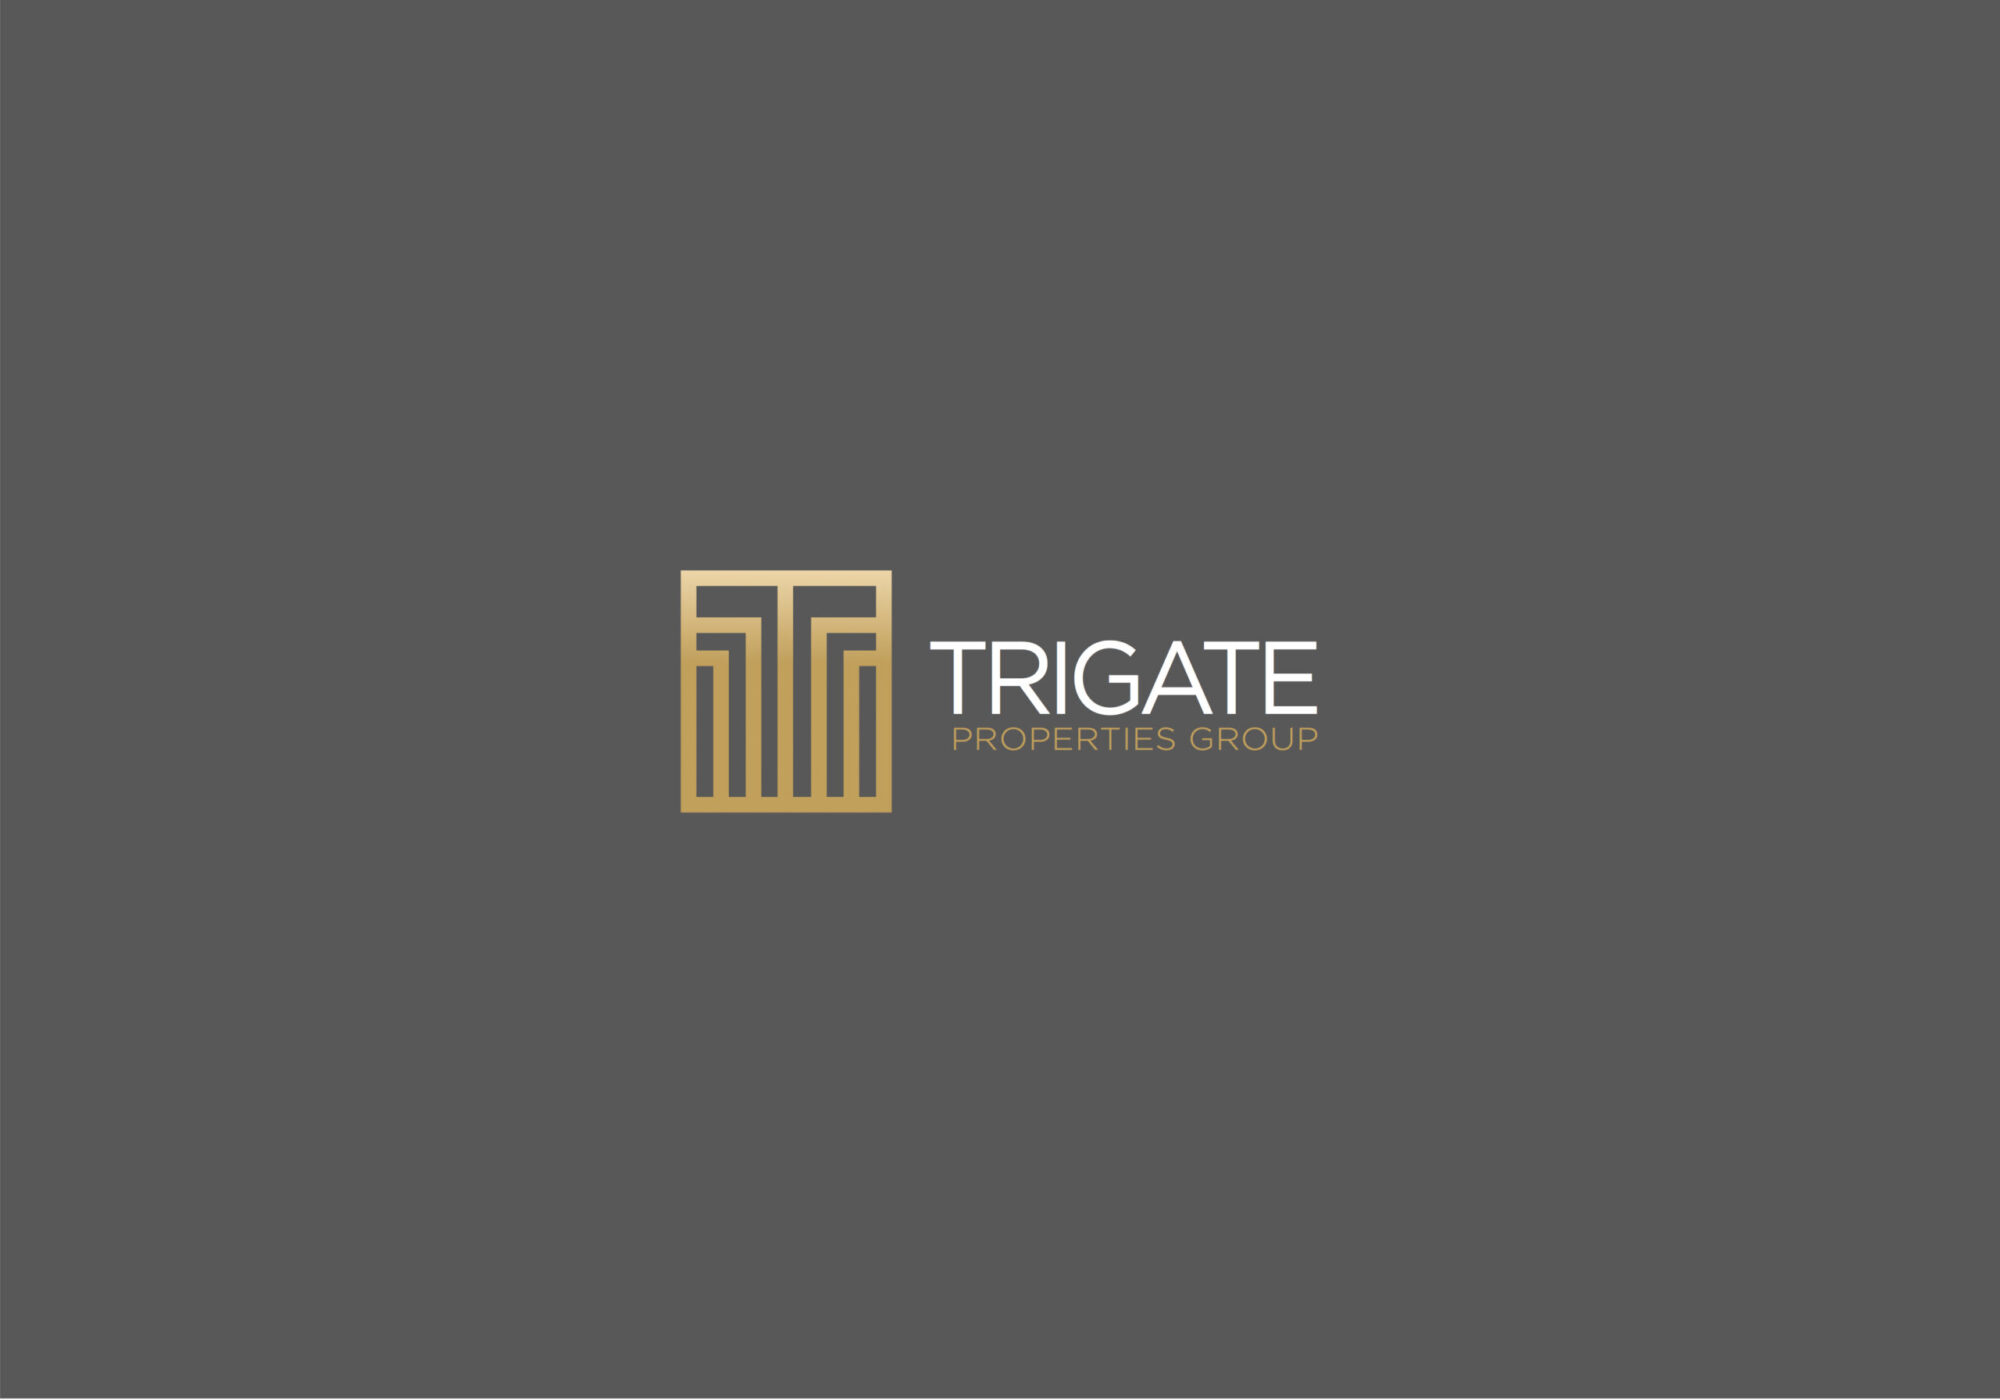 Trigate Properties Group